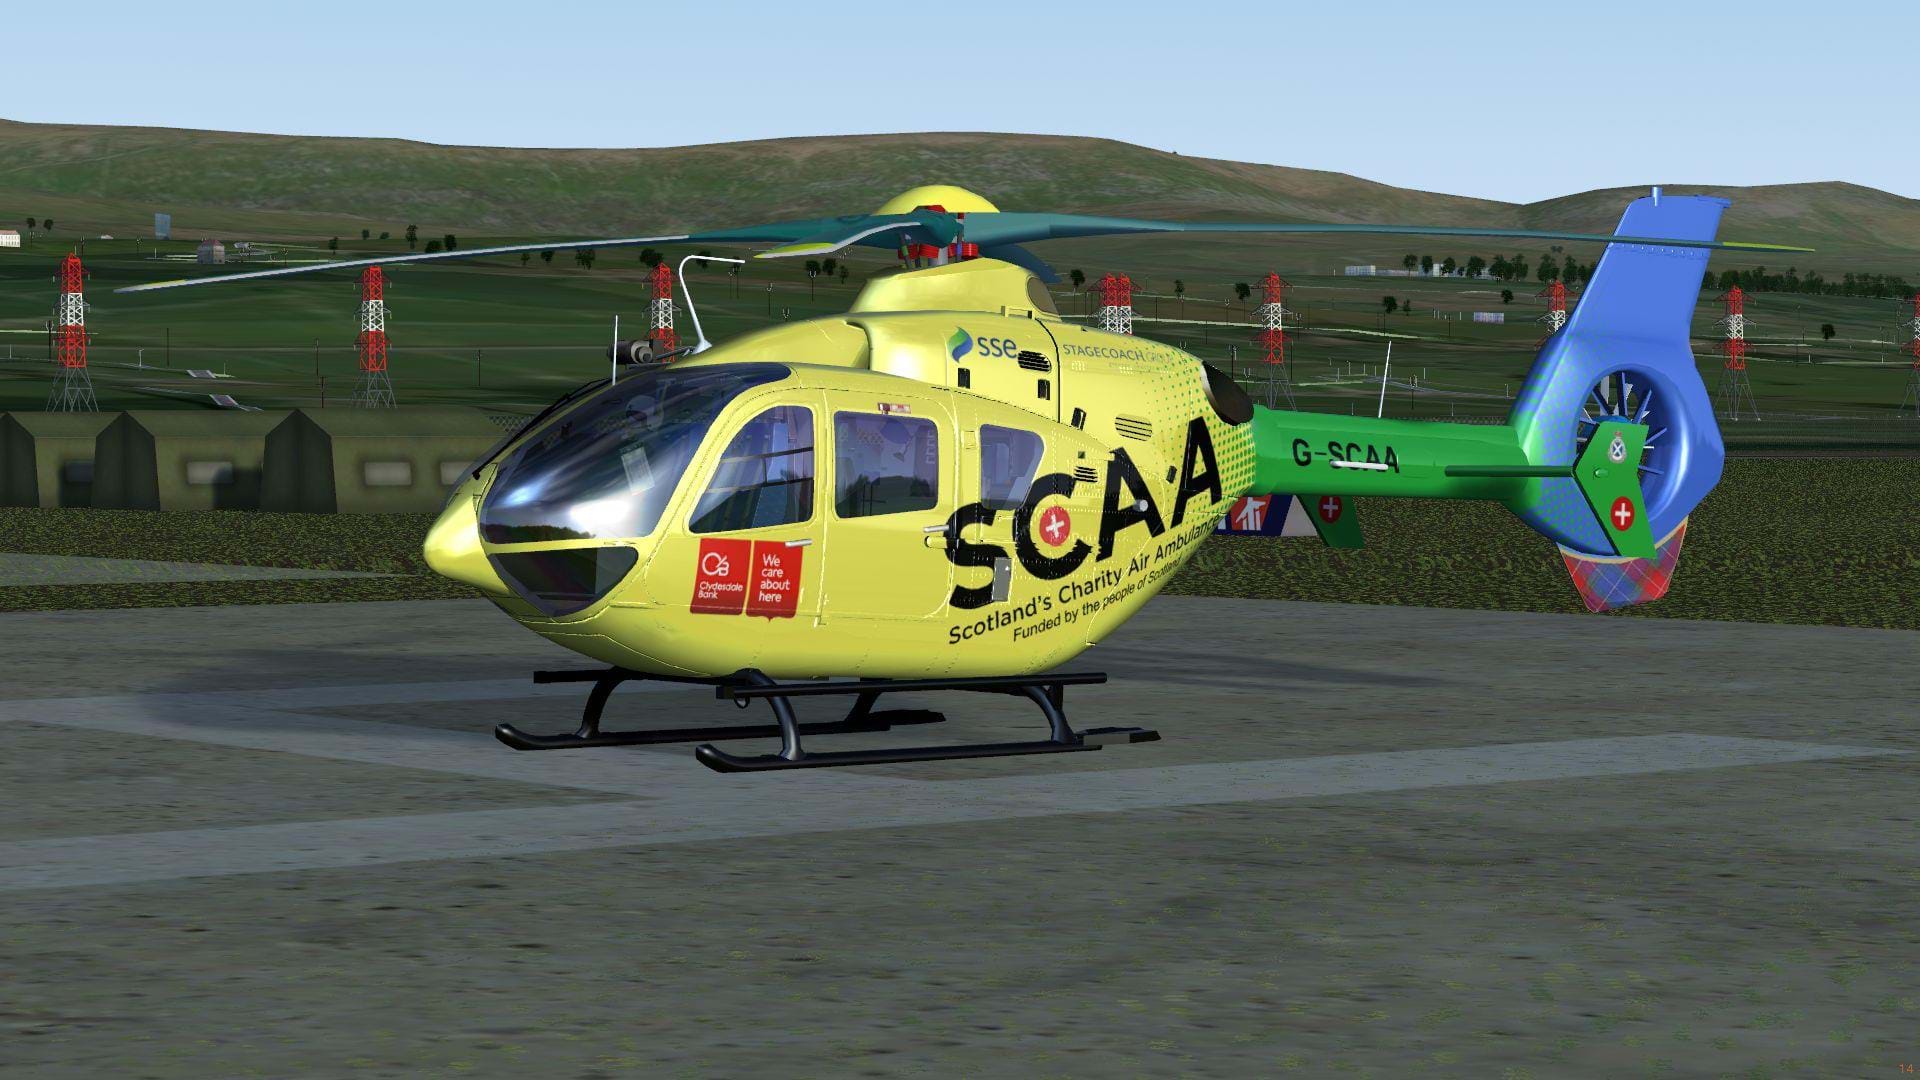 Donationware EC-135 Scottish Charity Air Ambulance livery for FlightGear